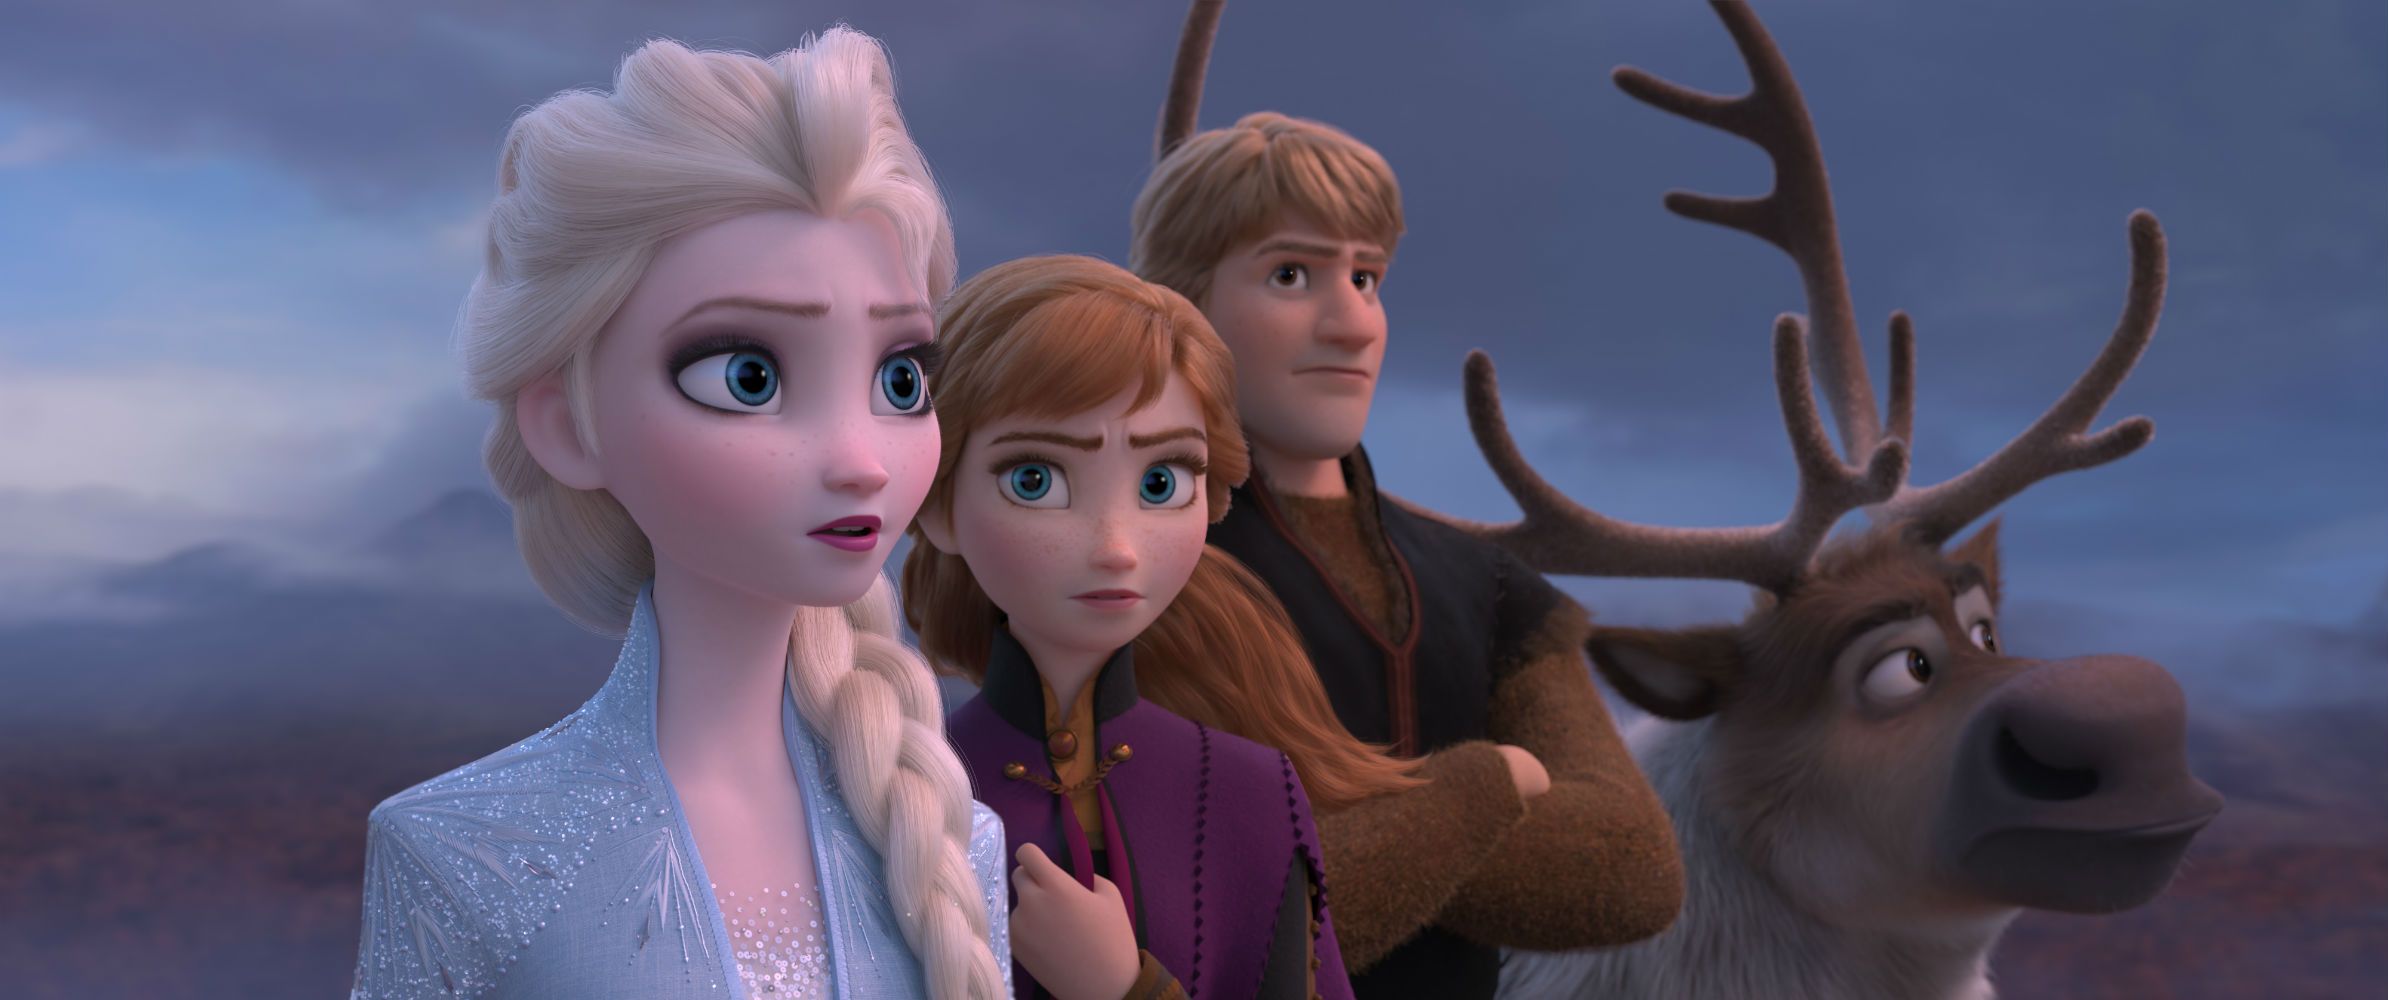 Frozen 2 Movie Teaser Trailer First Look At Disneys Animated Sequel